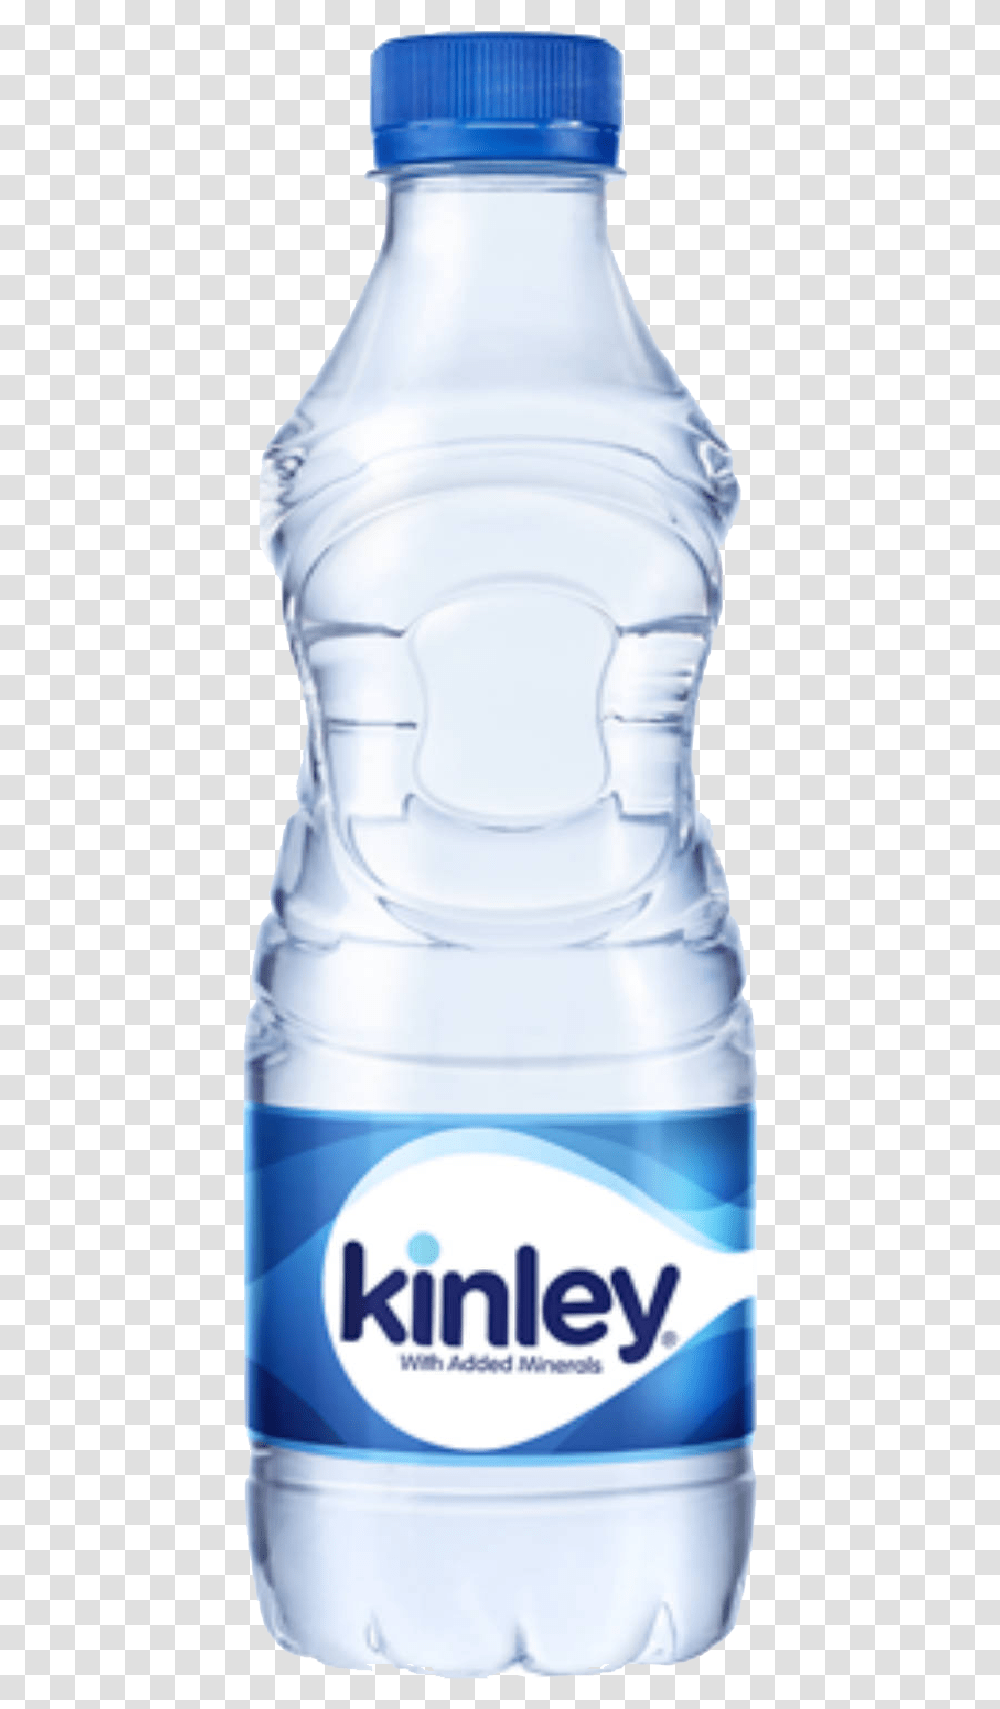 Water Bottle Image Kinley Water Bottle, Mineral Water, Beverage, Drink, Shaker Transparent Png